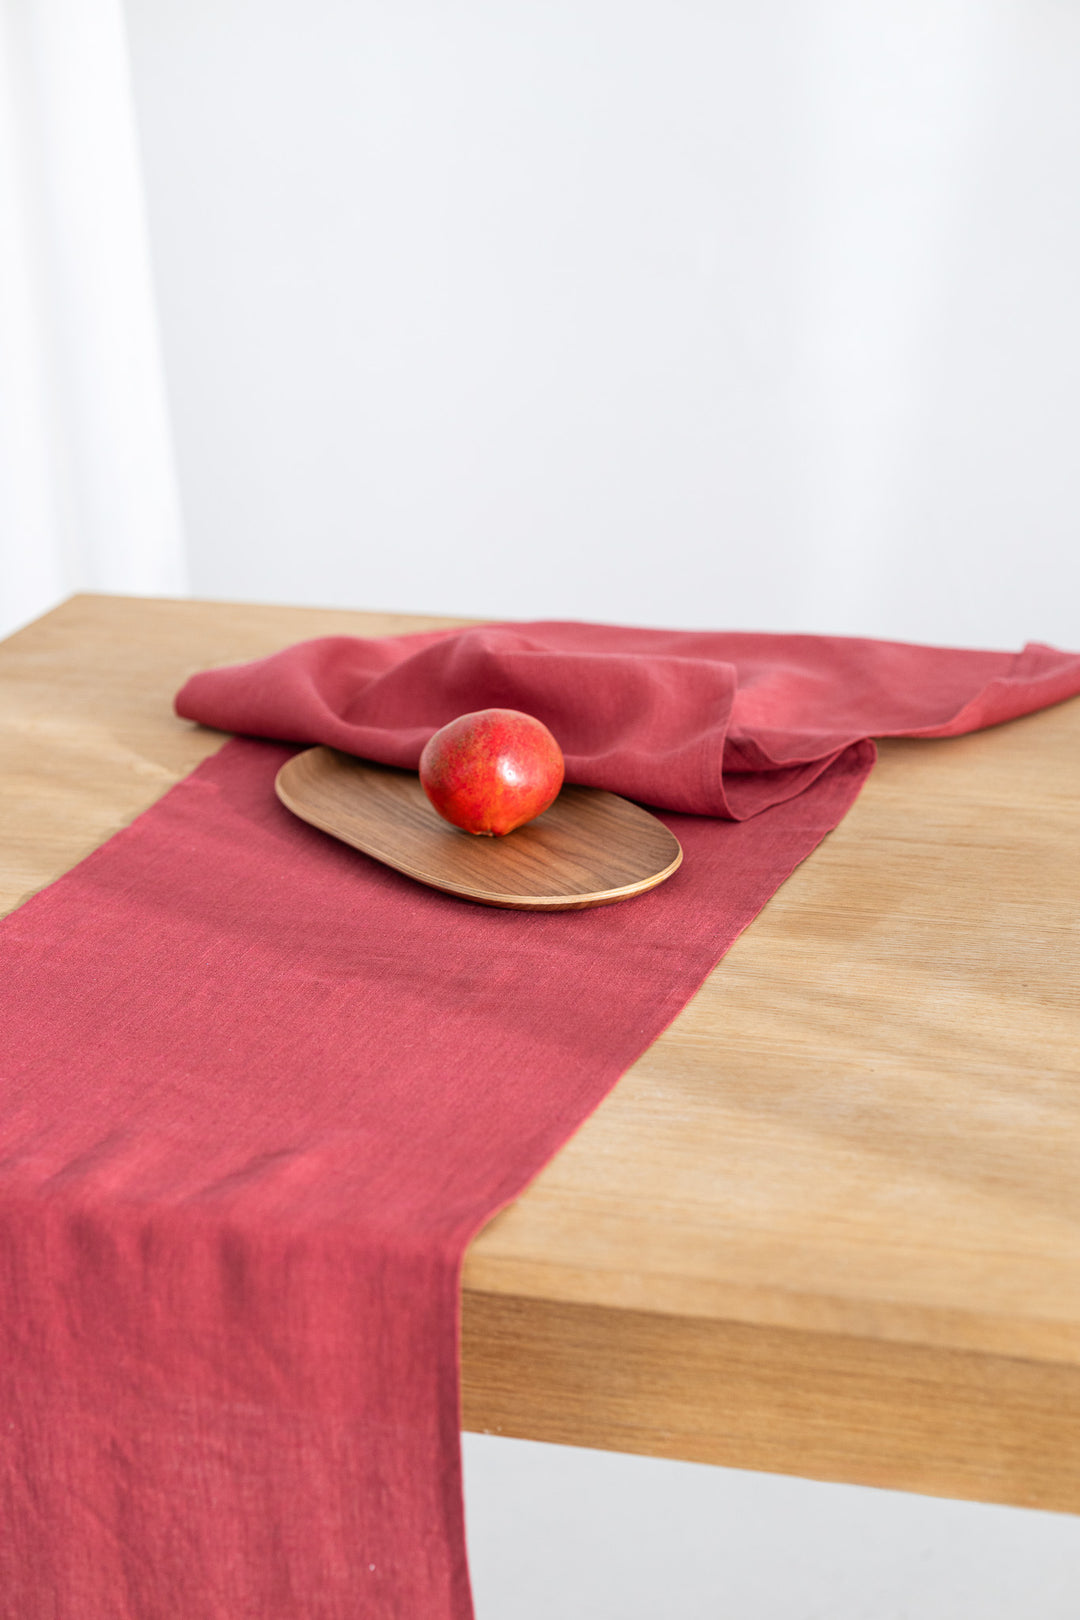 Linen Table Runner On Table In Raspberry Color 2 - Daily Linen